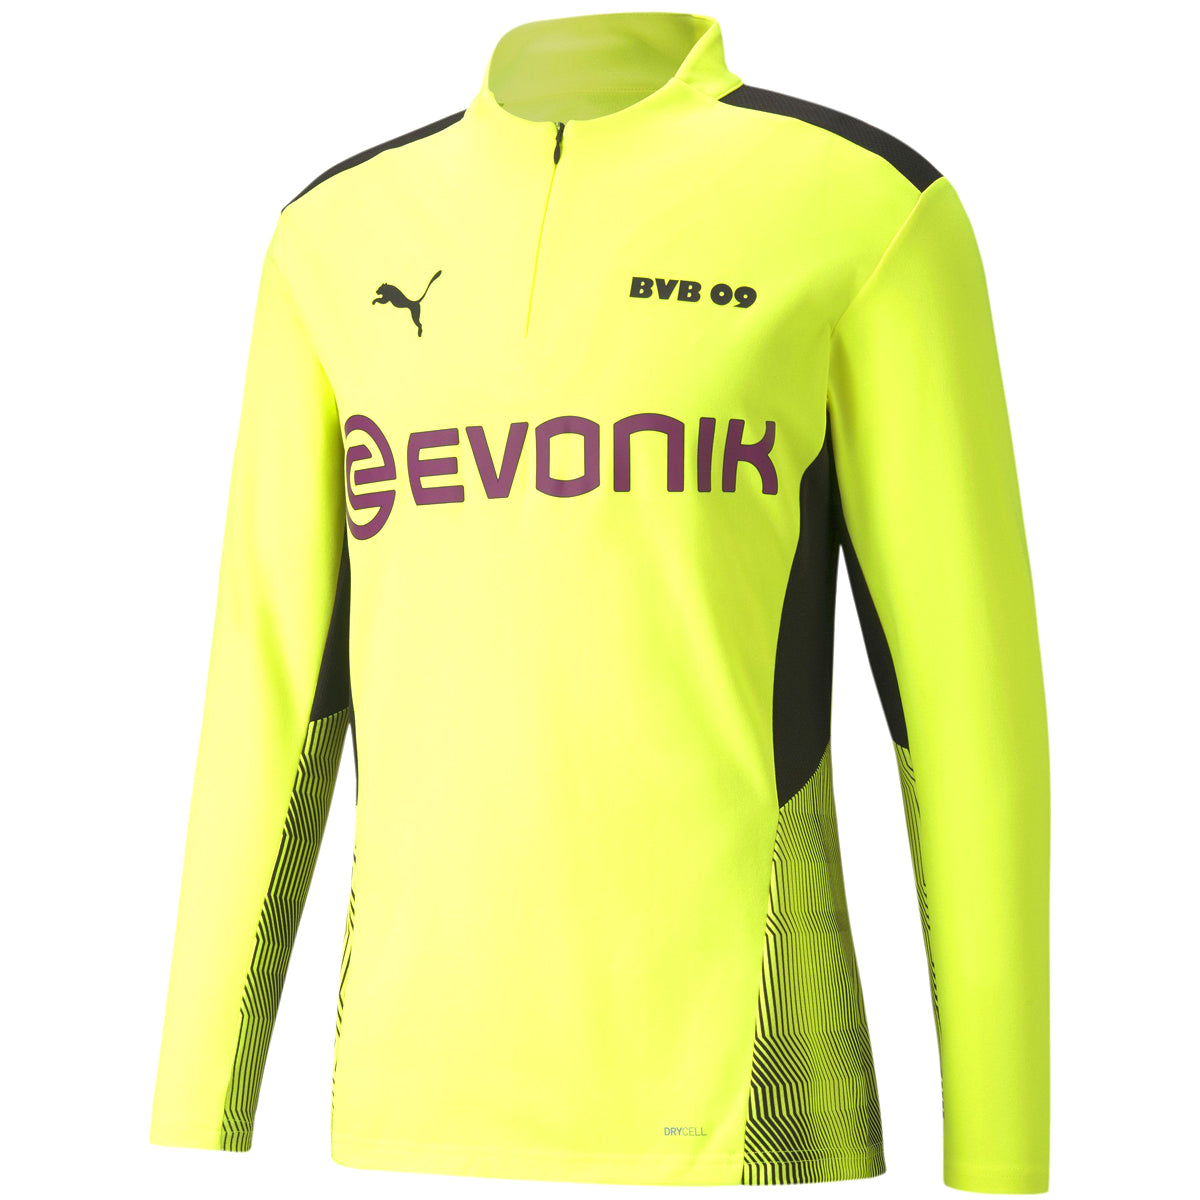 GOAL on X: Borussia Dortmund's new Puma home kit featuring the